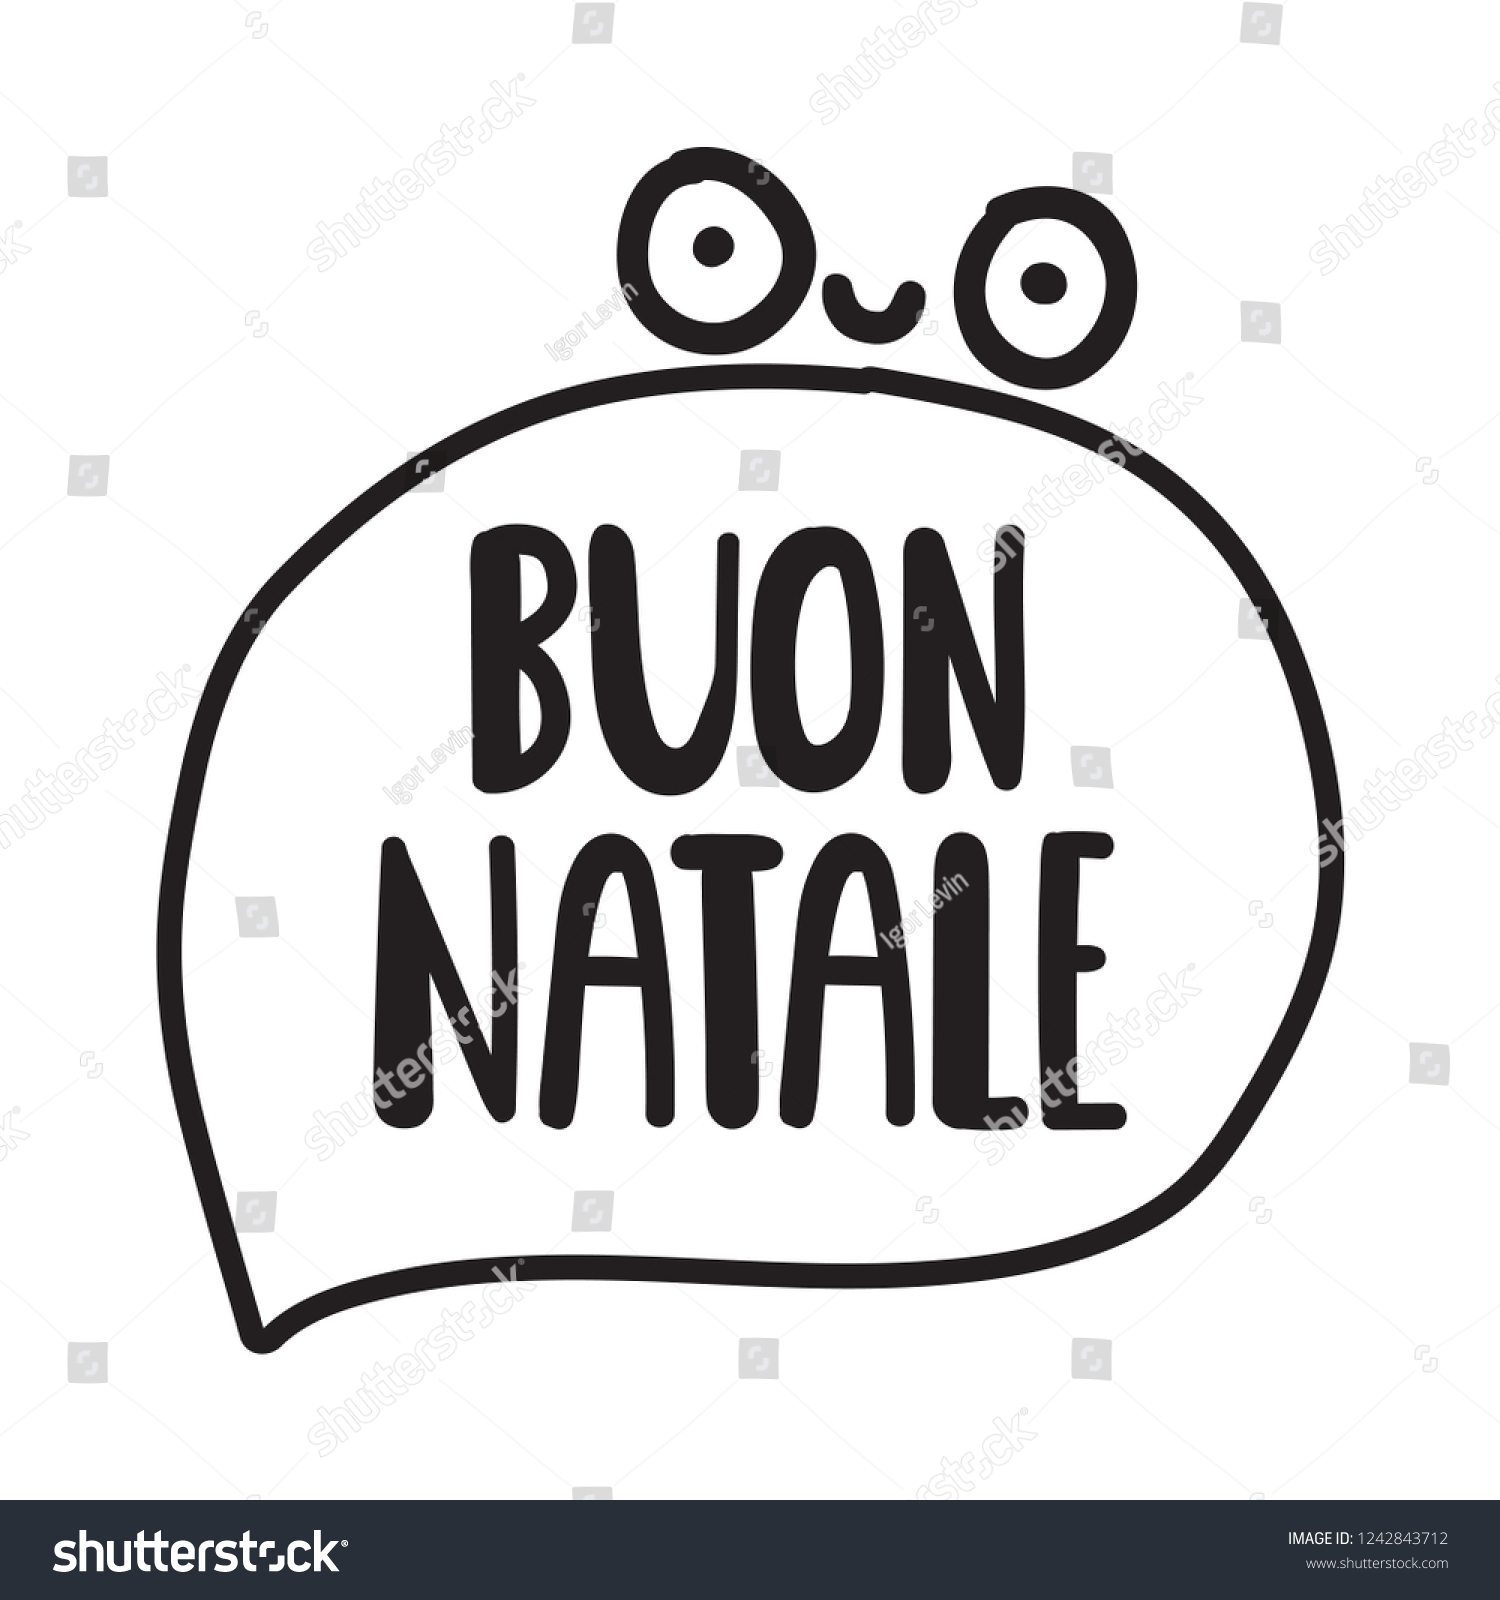 Stickers Natale.Buon Natale Merry Christmas Italian Vector Stock Vector Royalty Free 1242843712